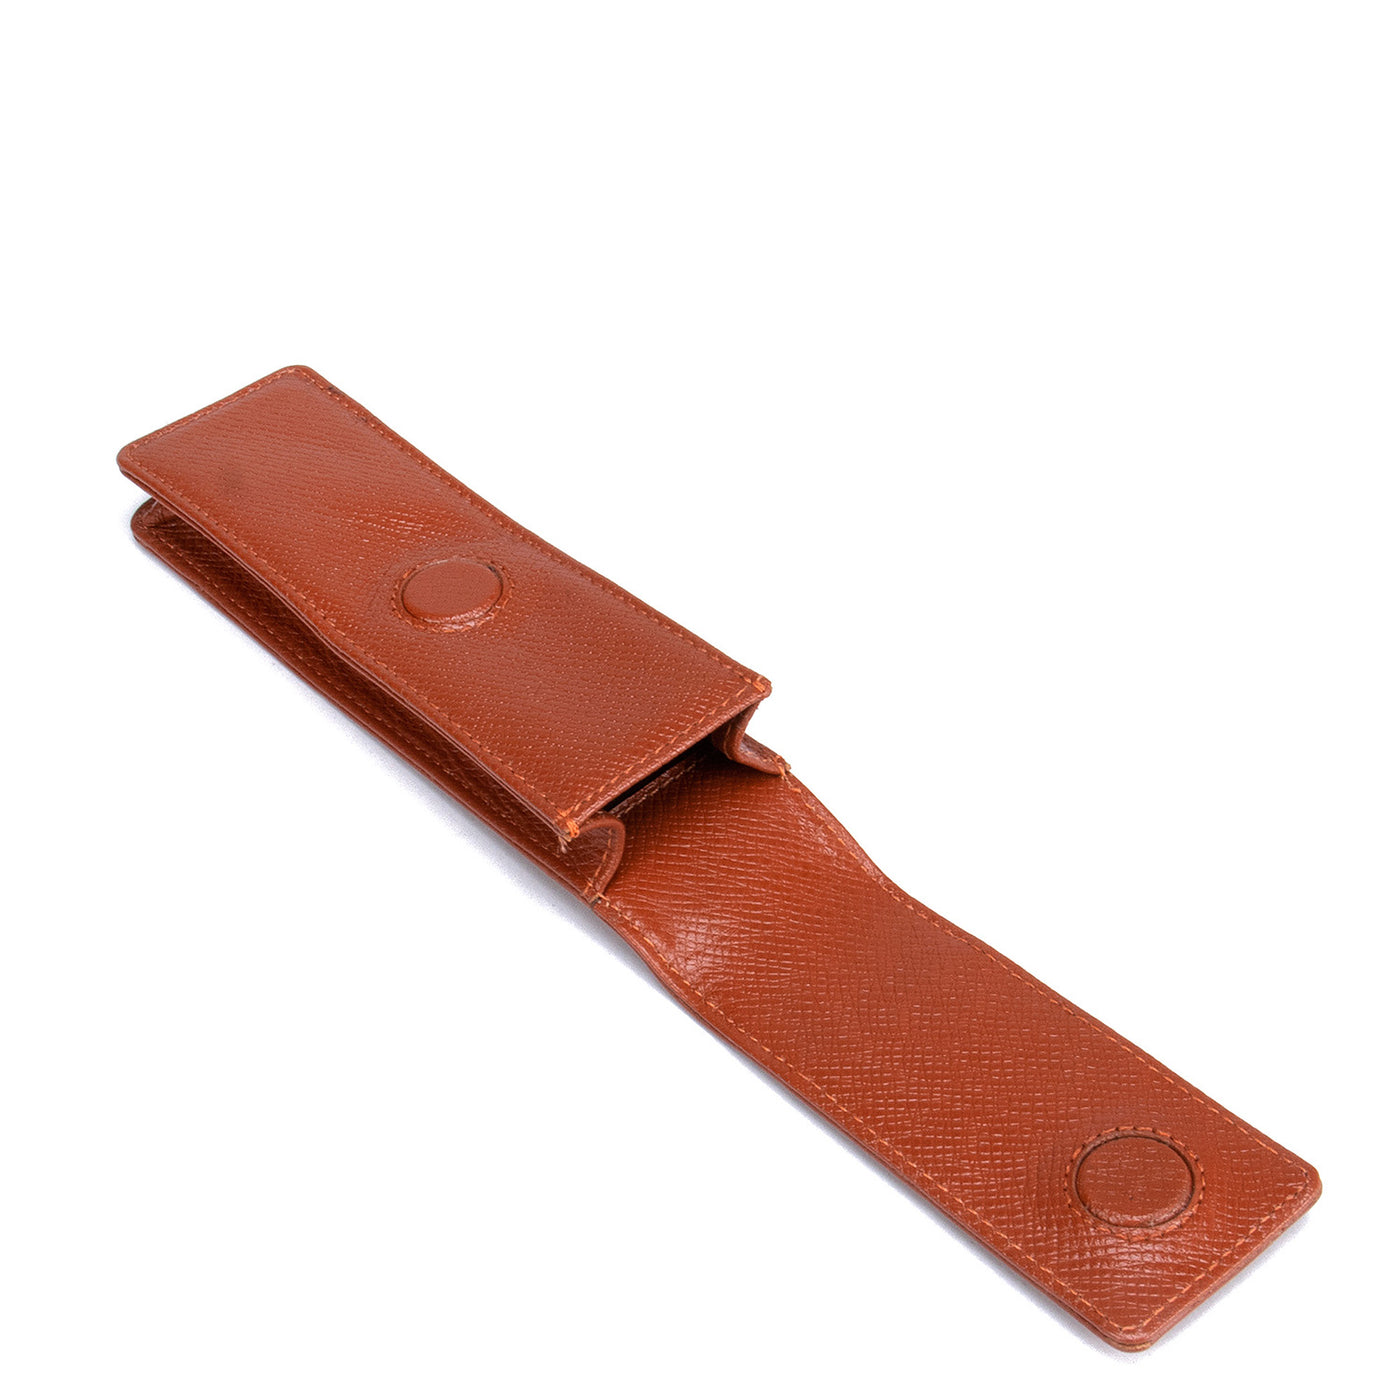 Franzy Leather Pen Case - Rust Orange